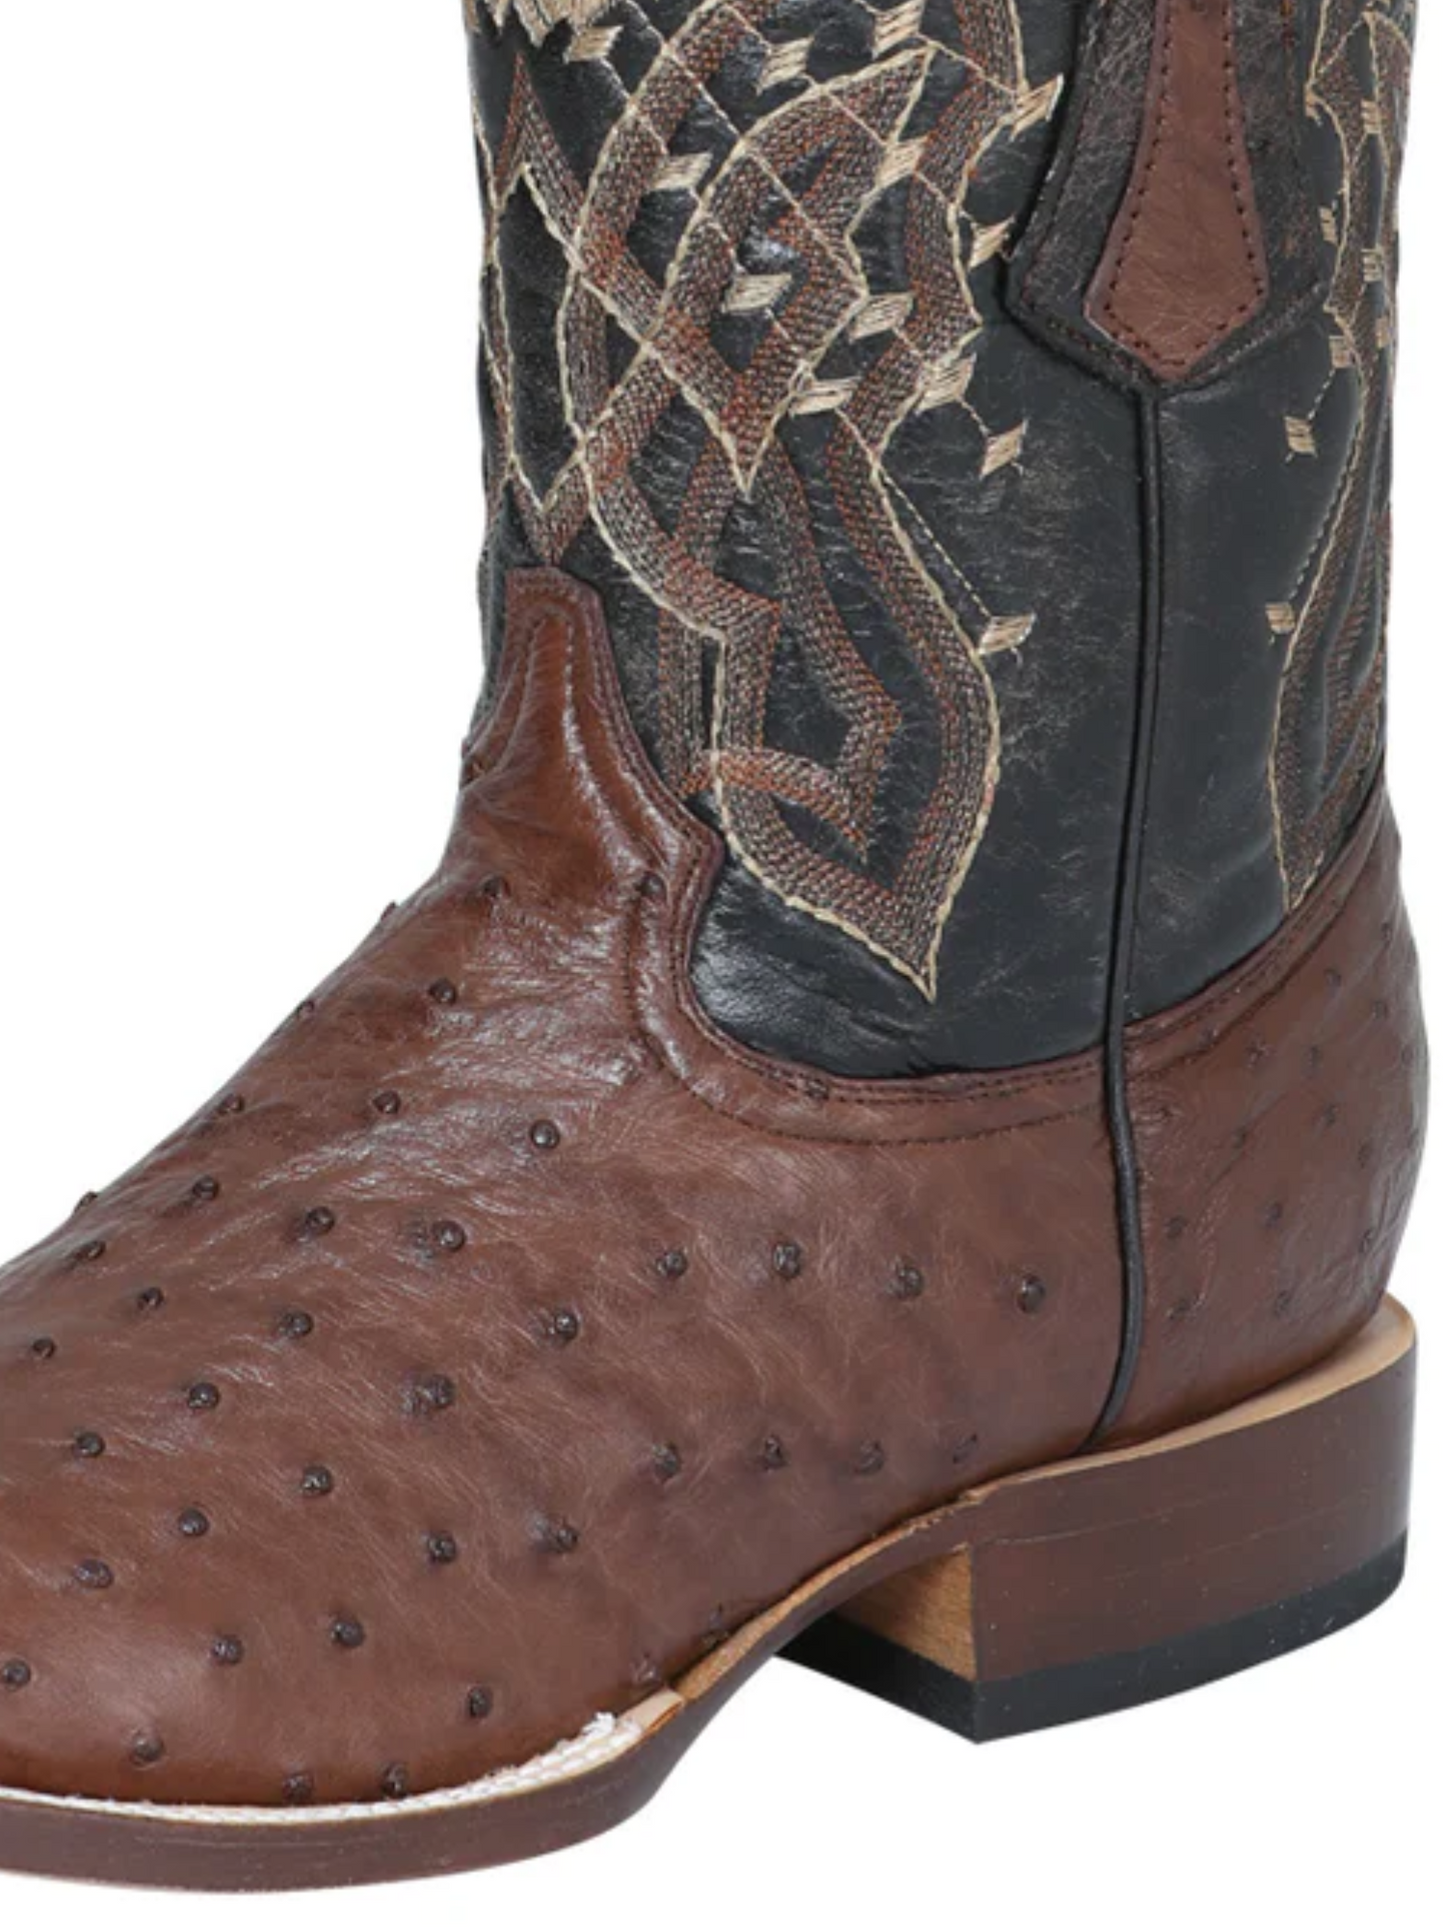 Original Ostrich Rodeo Exotic Cowboy Boots for Men 'Centenario' - ID: 124407